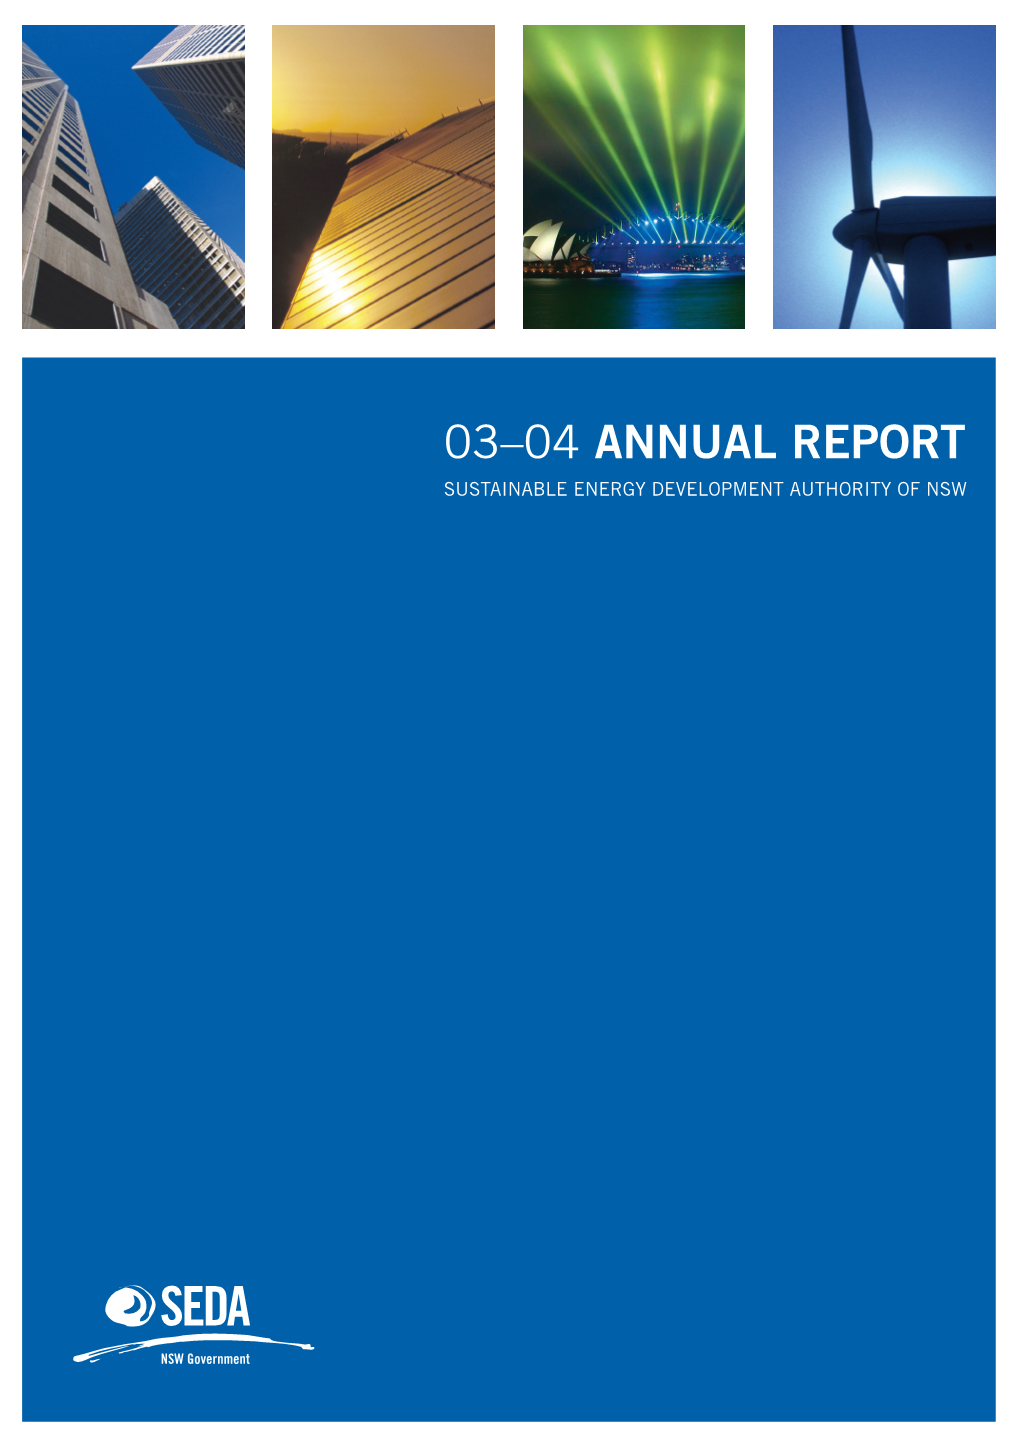 SEDA Annual Report 2004